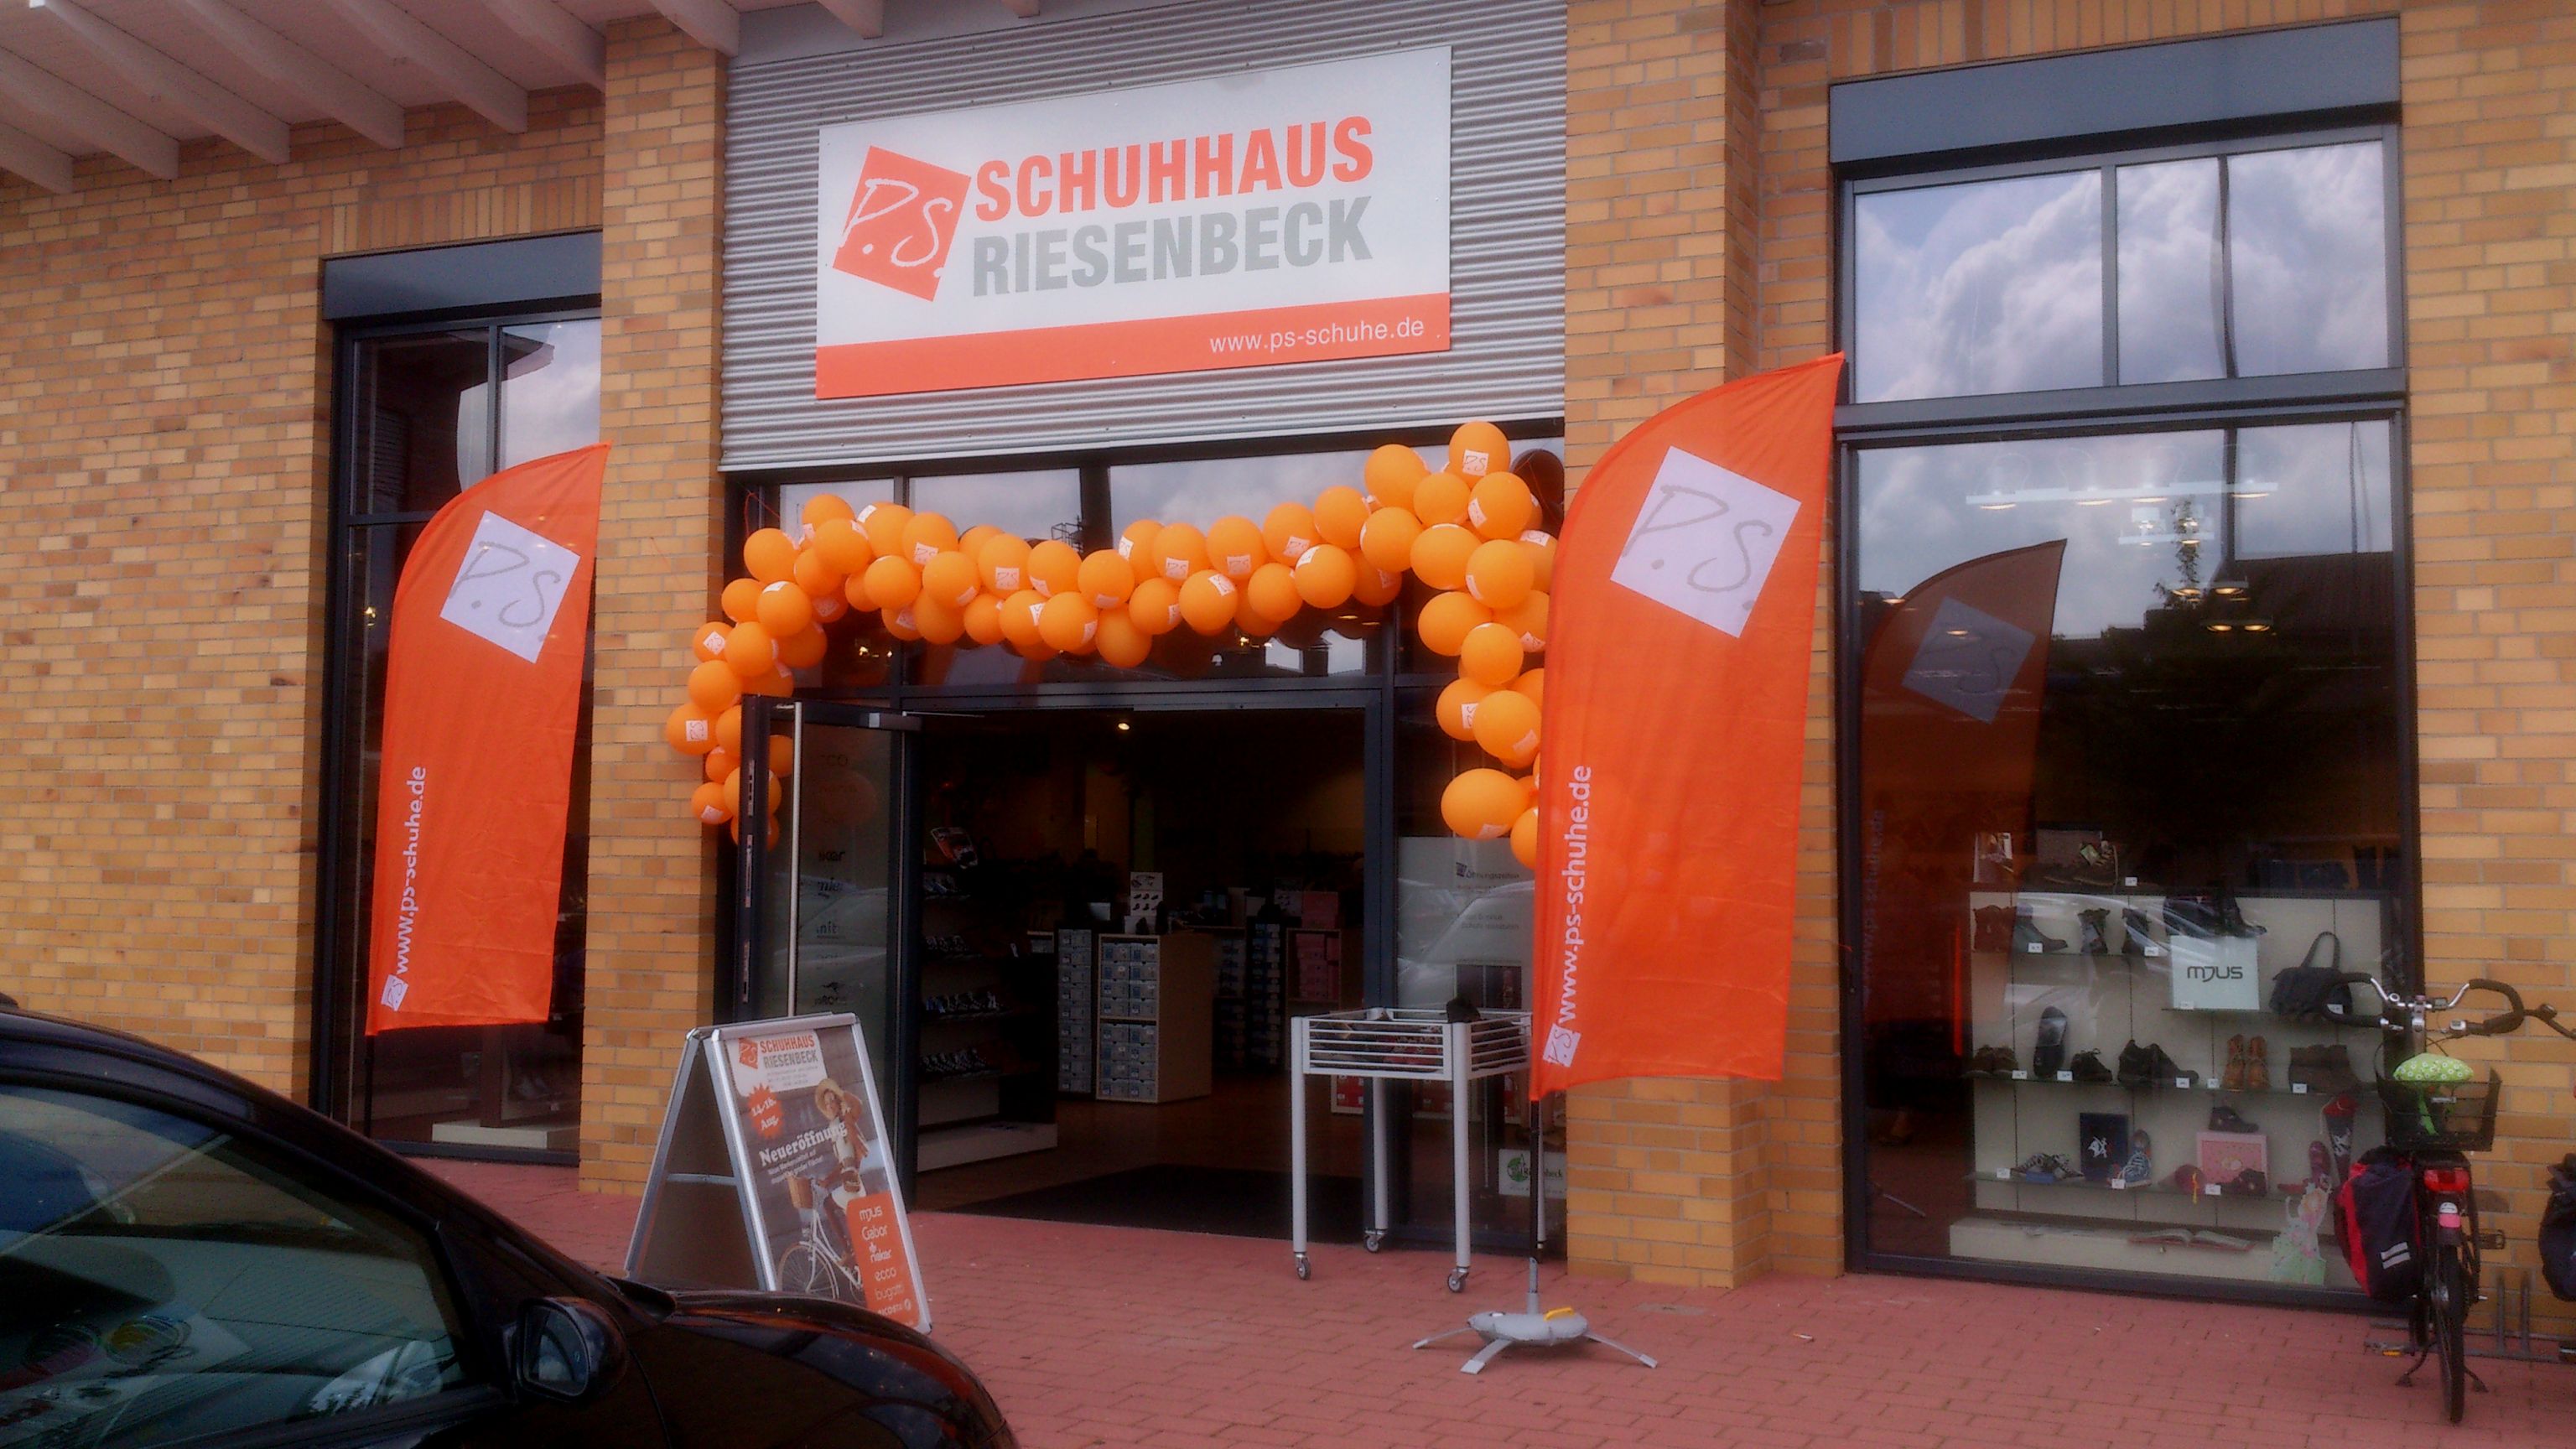 P.S. Schuhhaus Riesenbeck